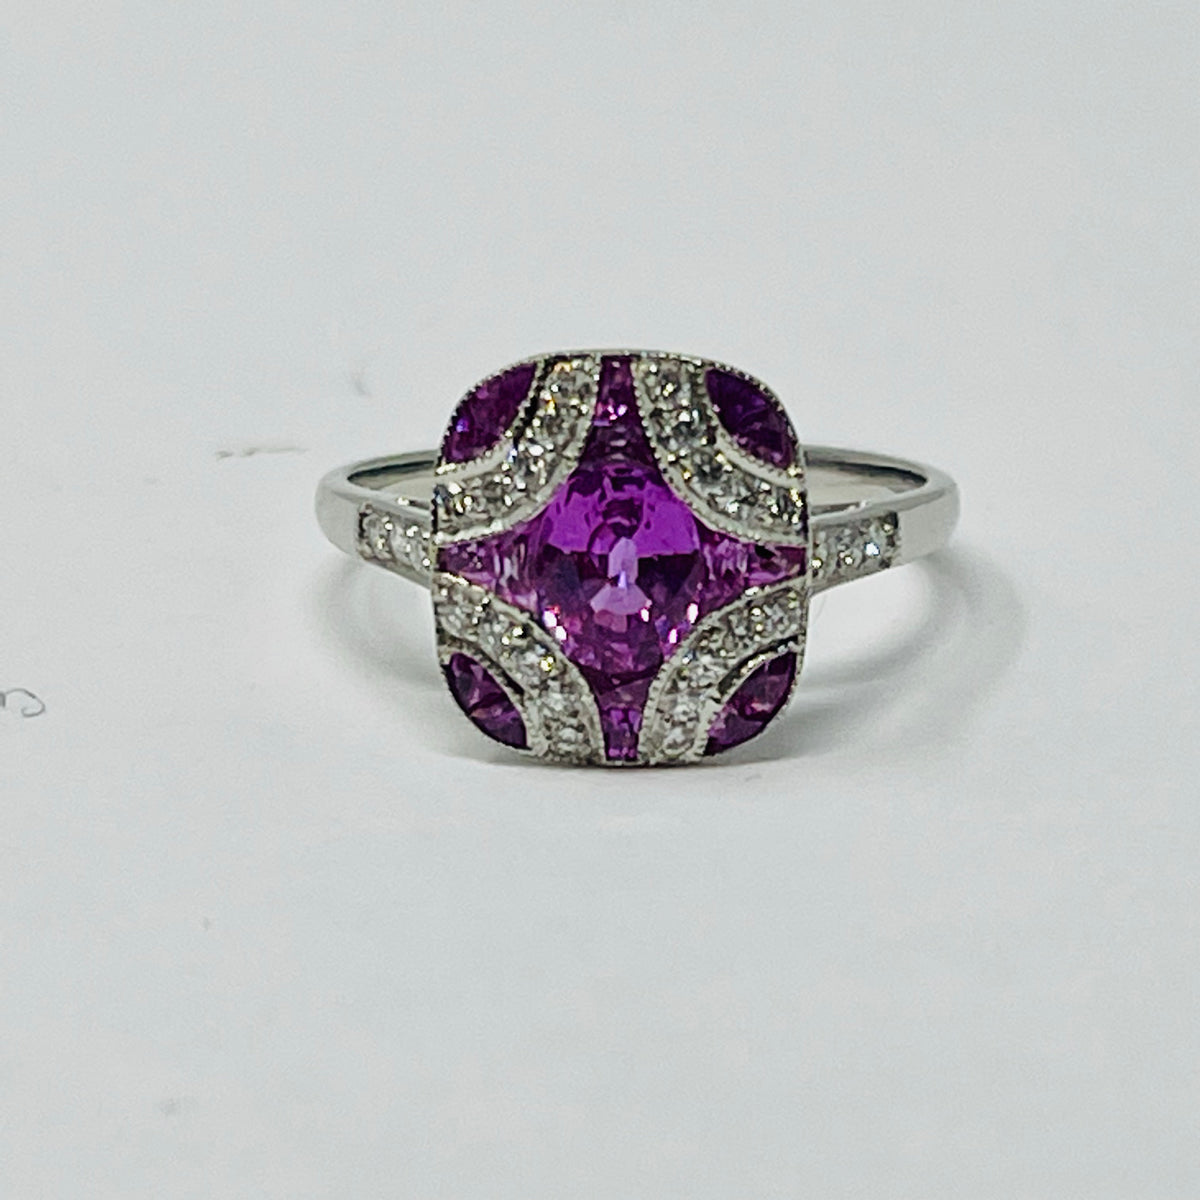 Mian Tek Platinum Ring with Pink Sapphire and Diamond